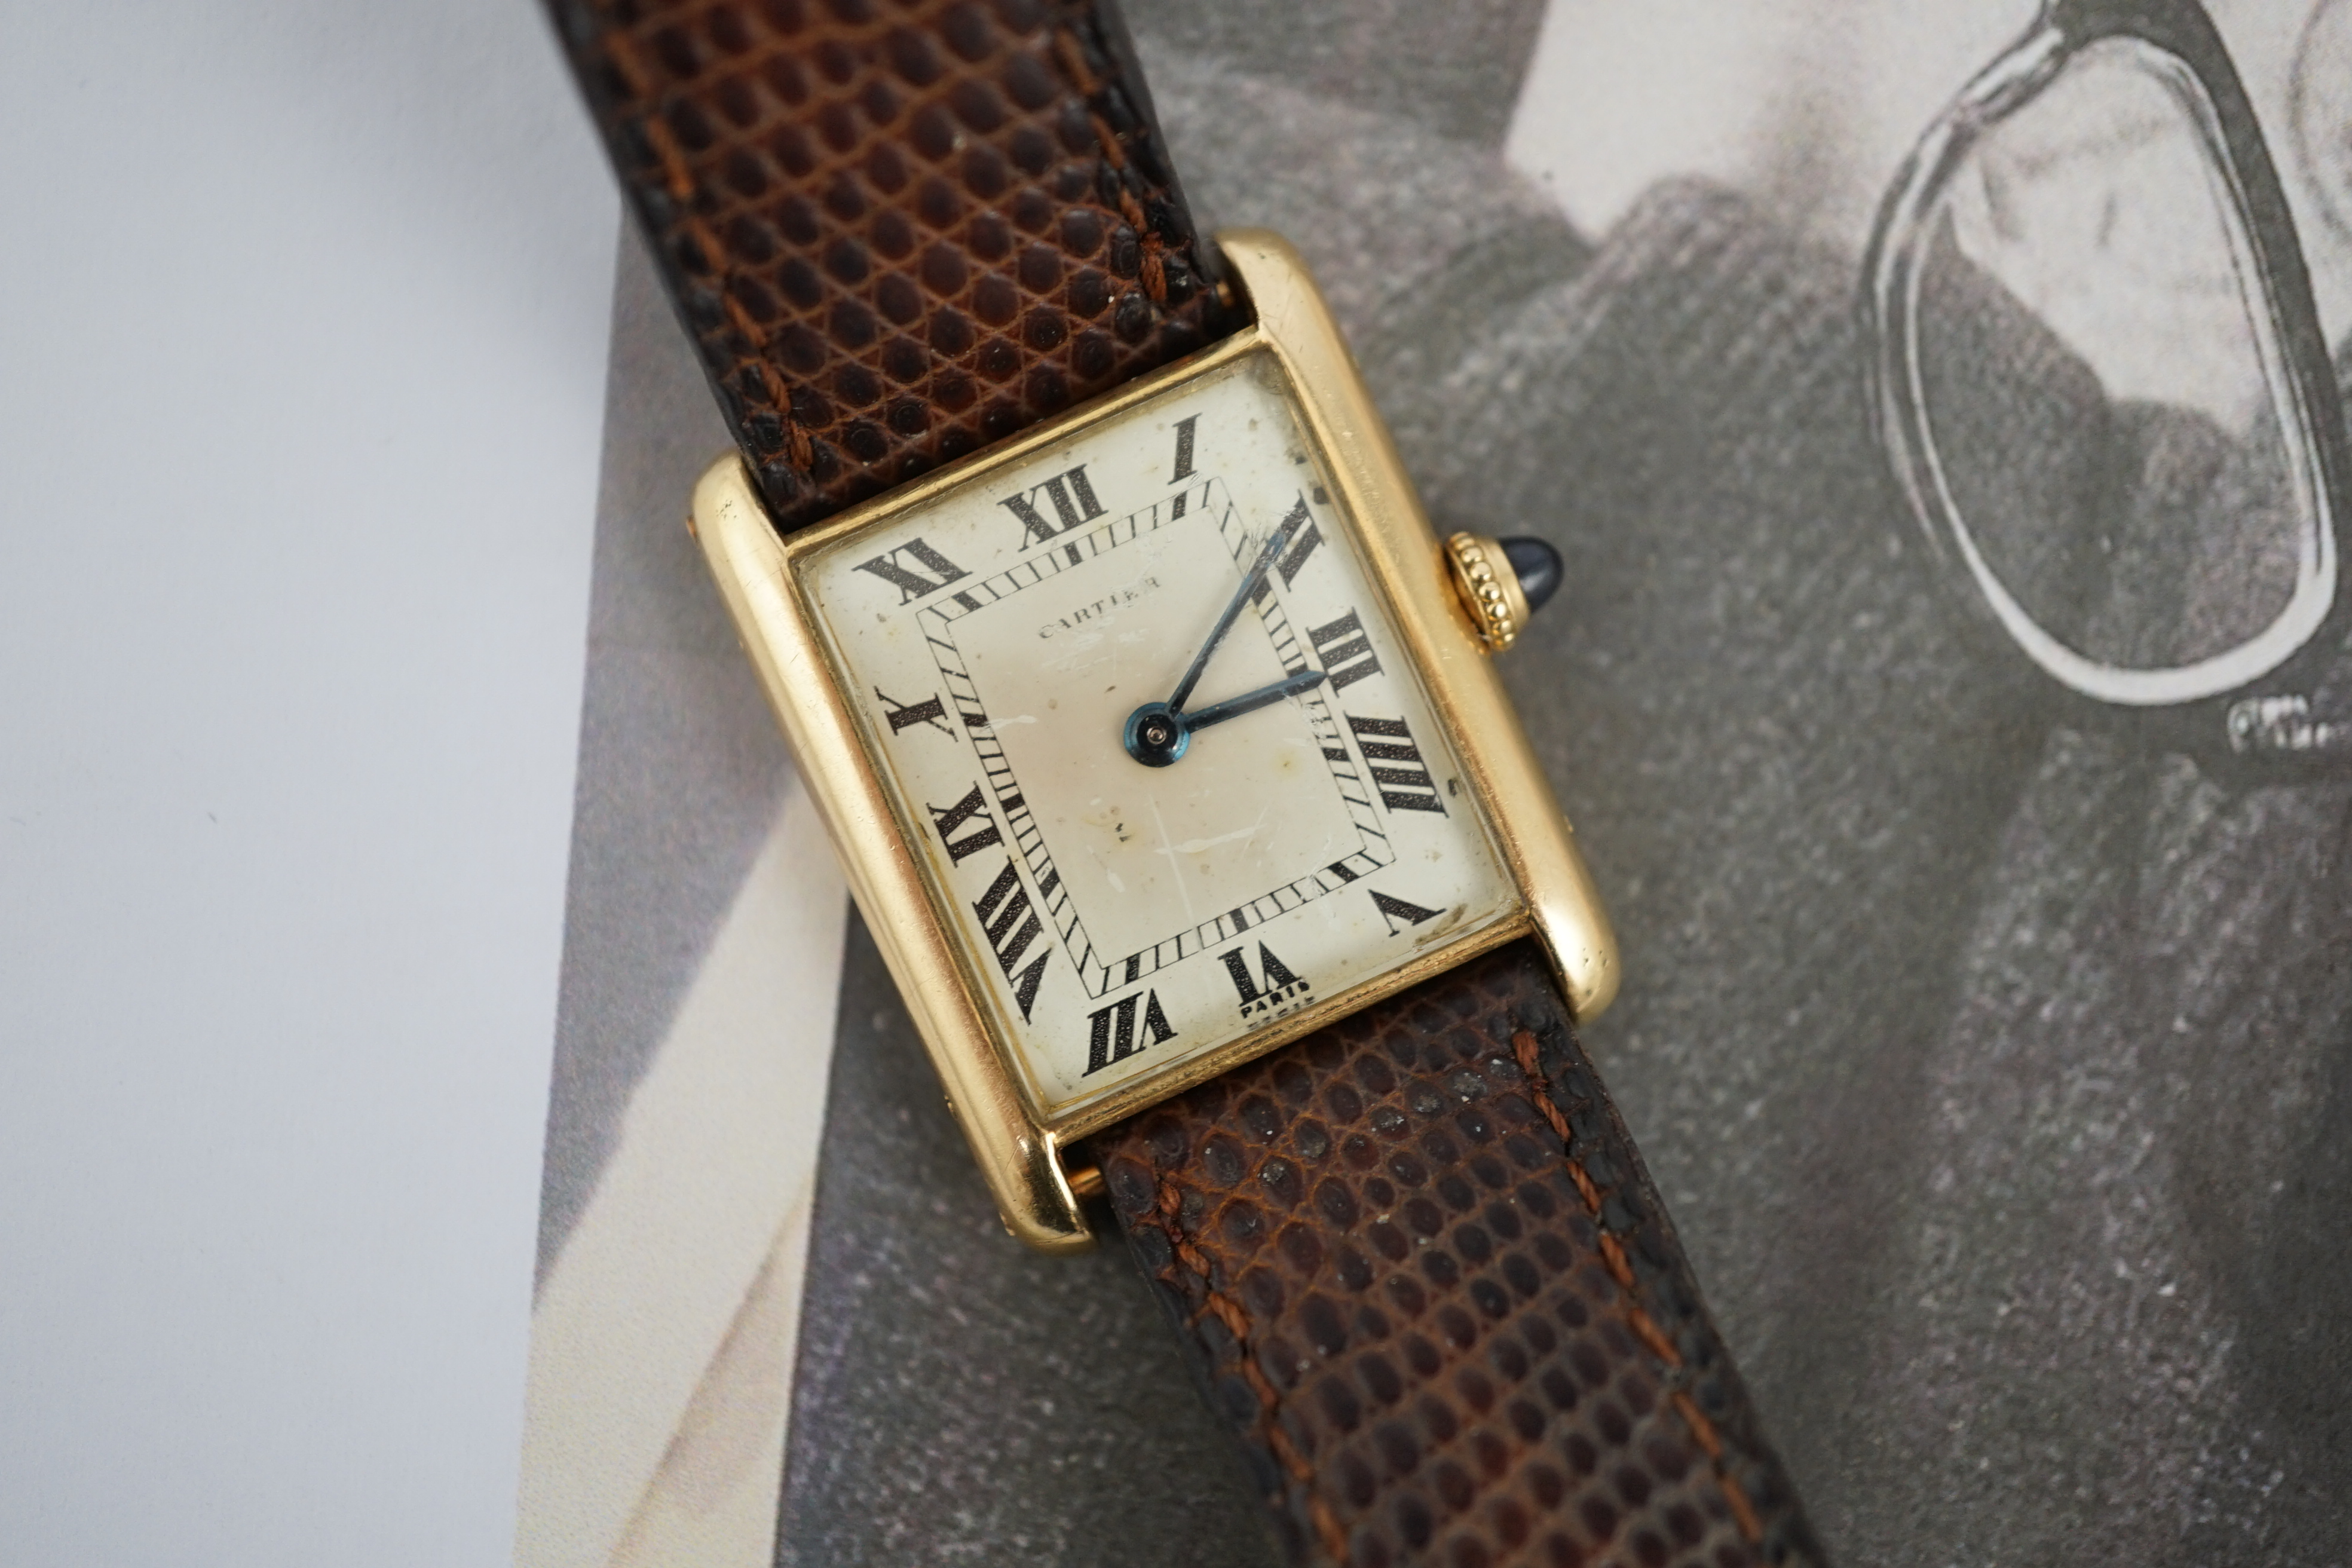 Richard Avedon (American, 1923-2004), a Cartier 18ct. gold tank manual wind wrist watch